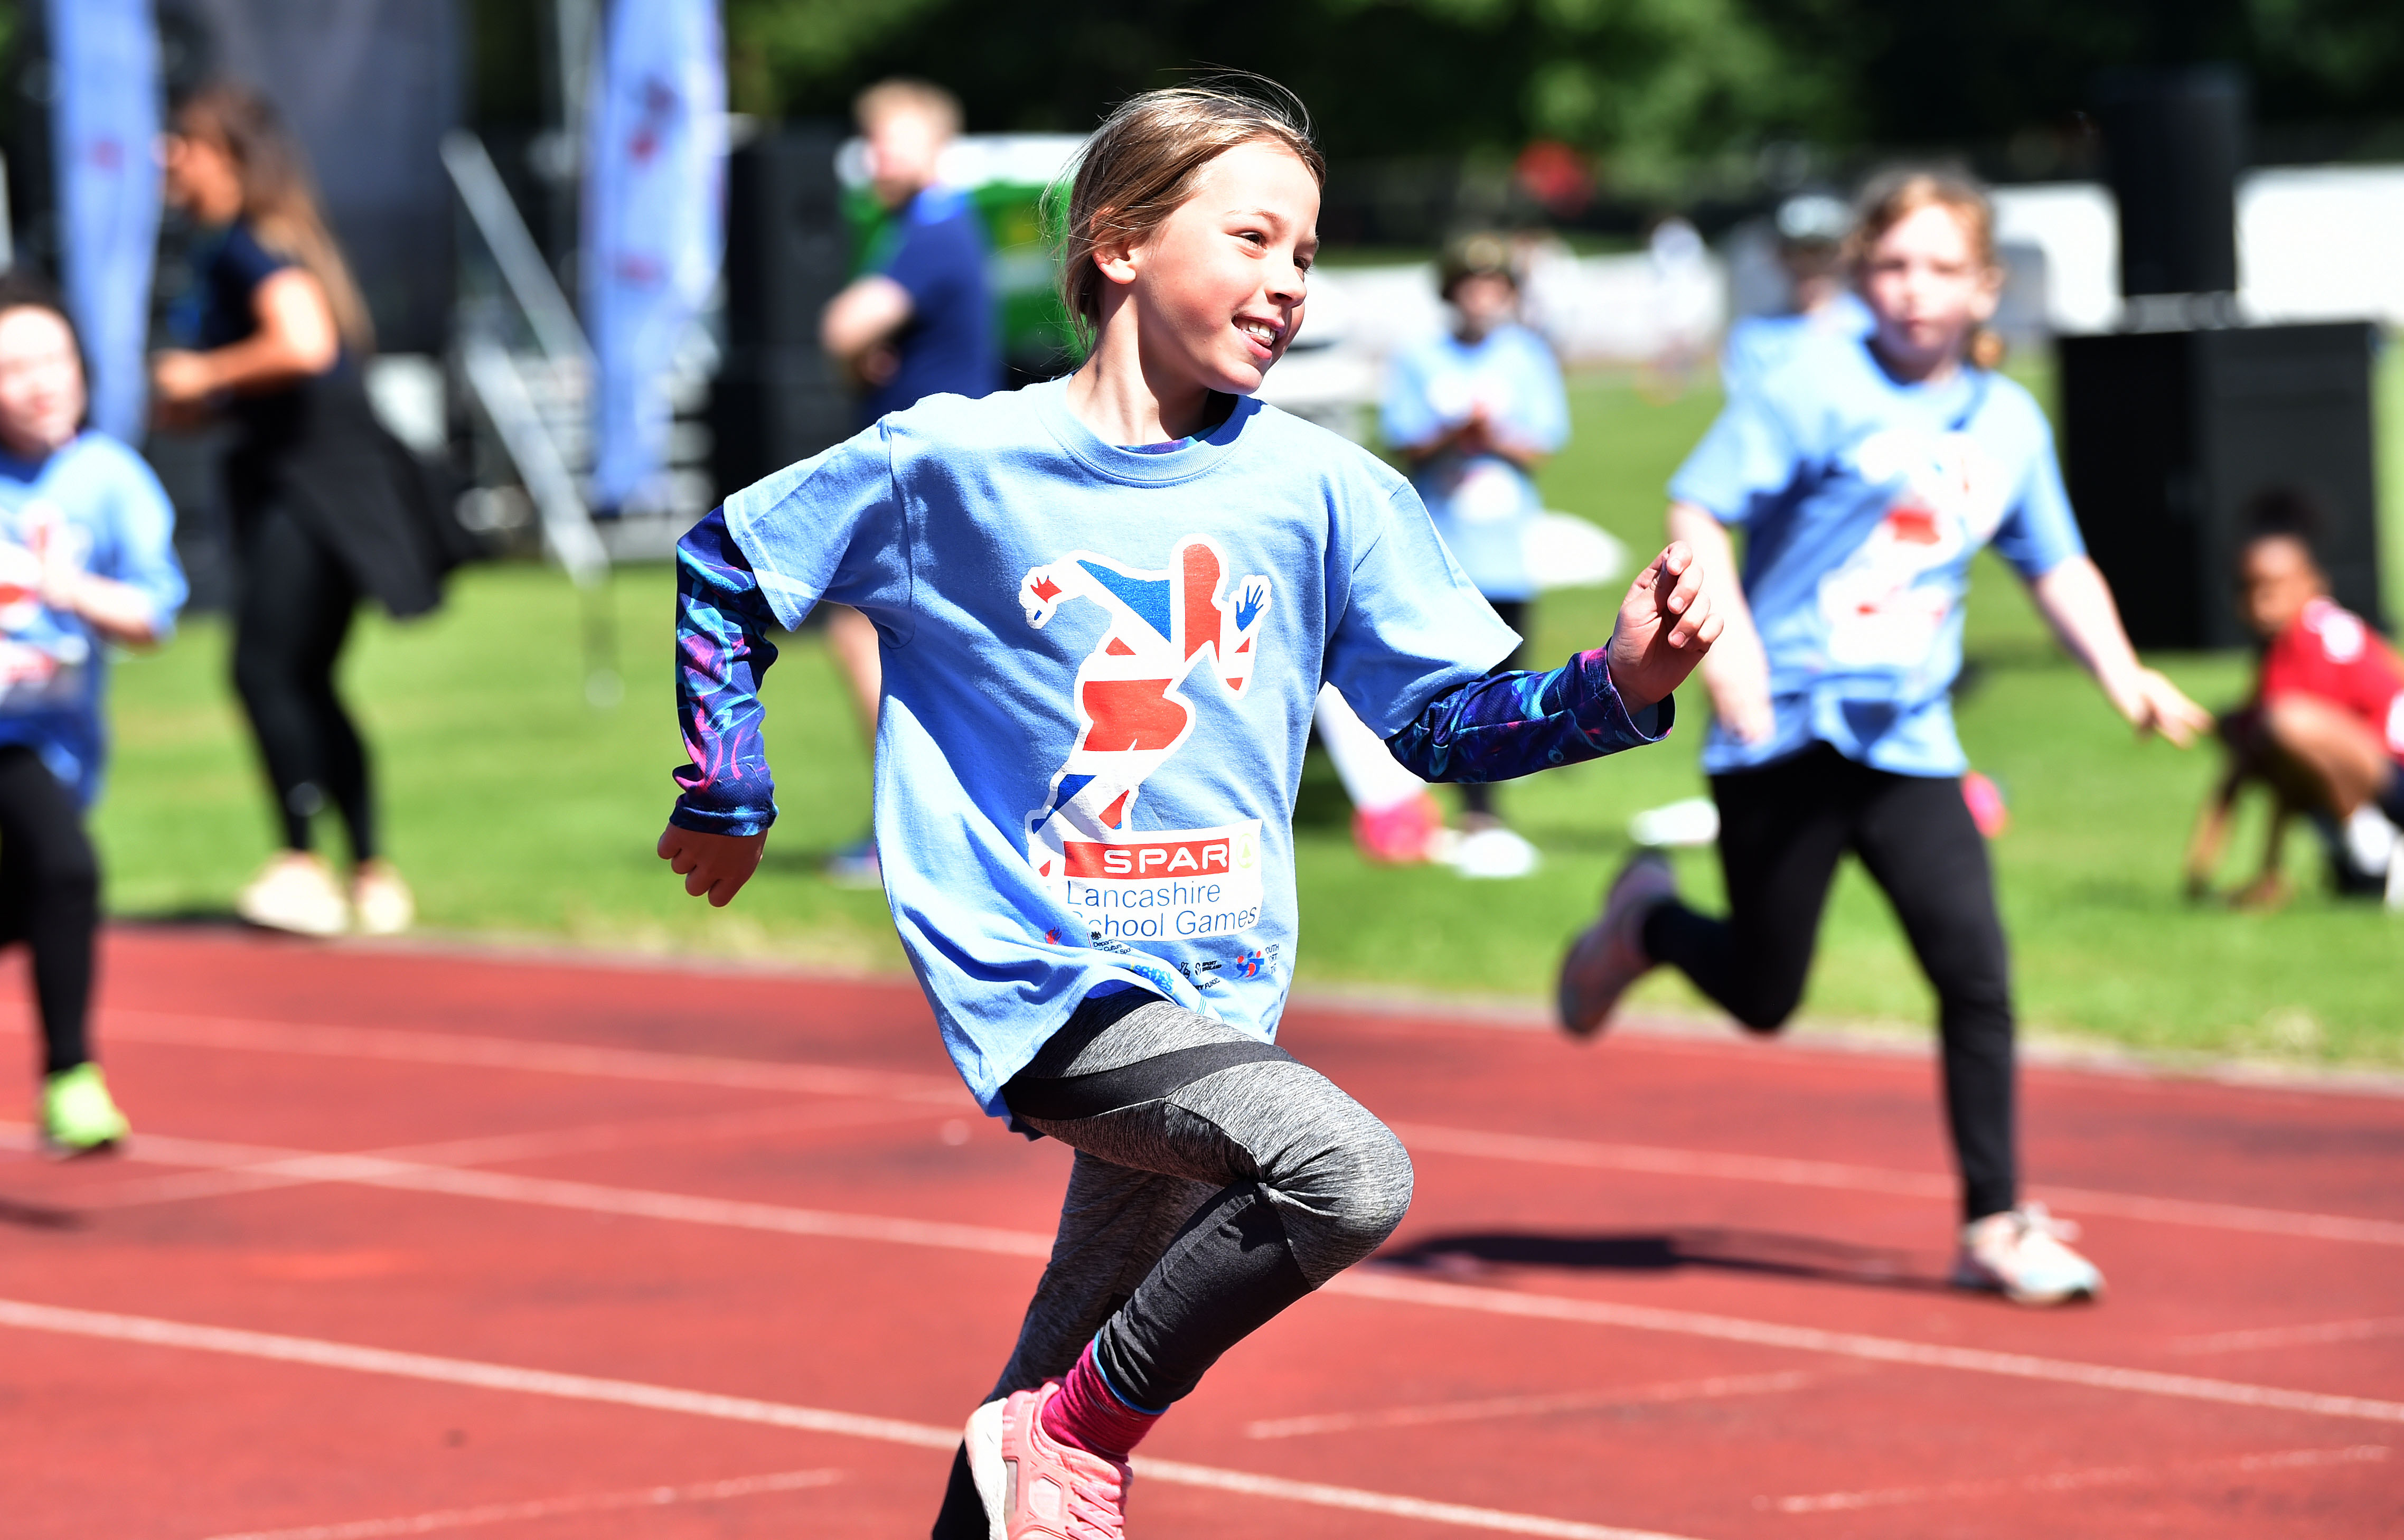 Lancashire School Games - Heysham, Sophie Arkholme School running